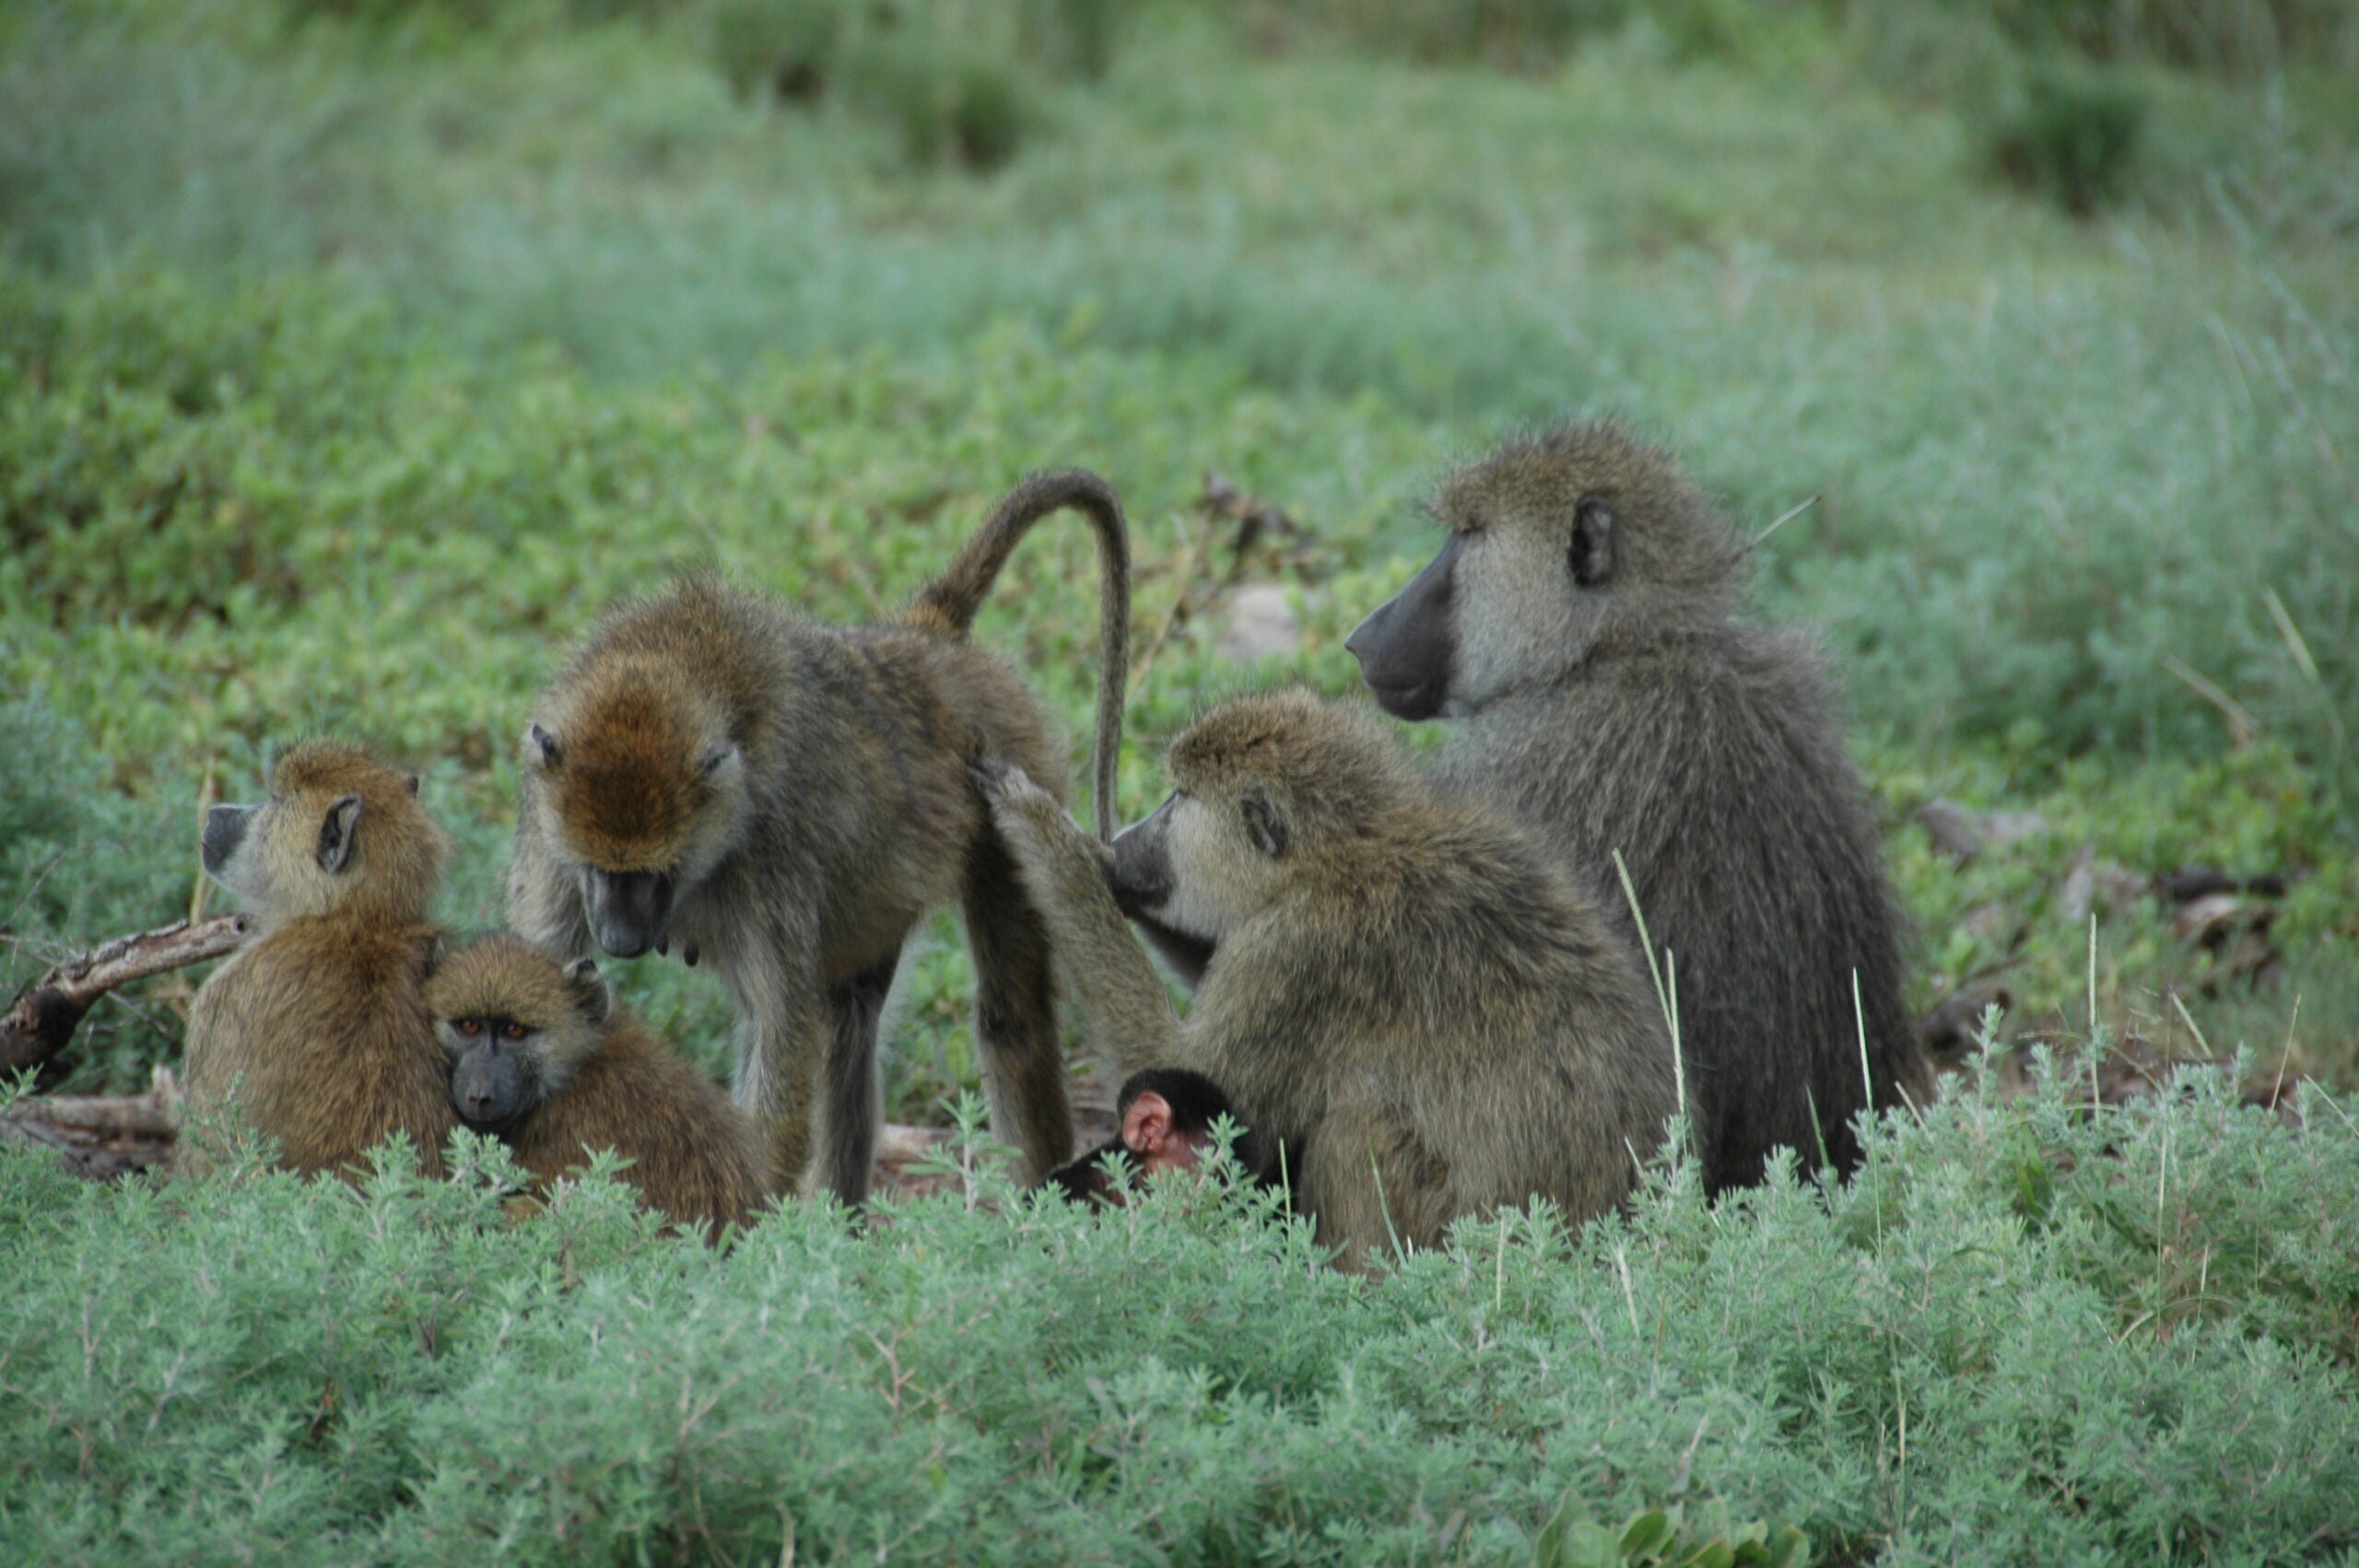 Two female baboons in Amboseli, Kenya, groom together, a baboonâs way of social bonding